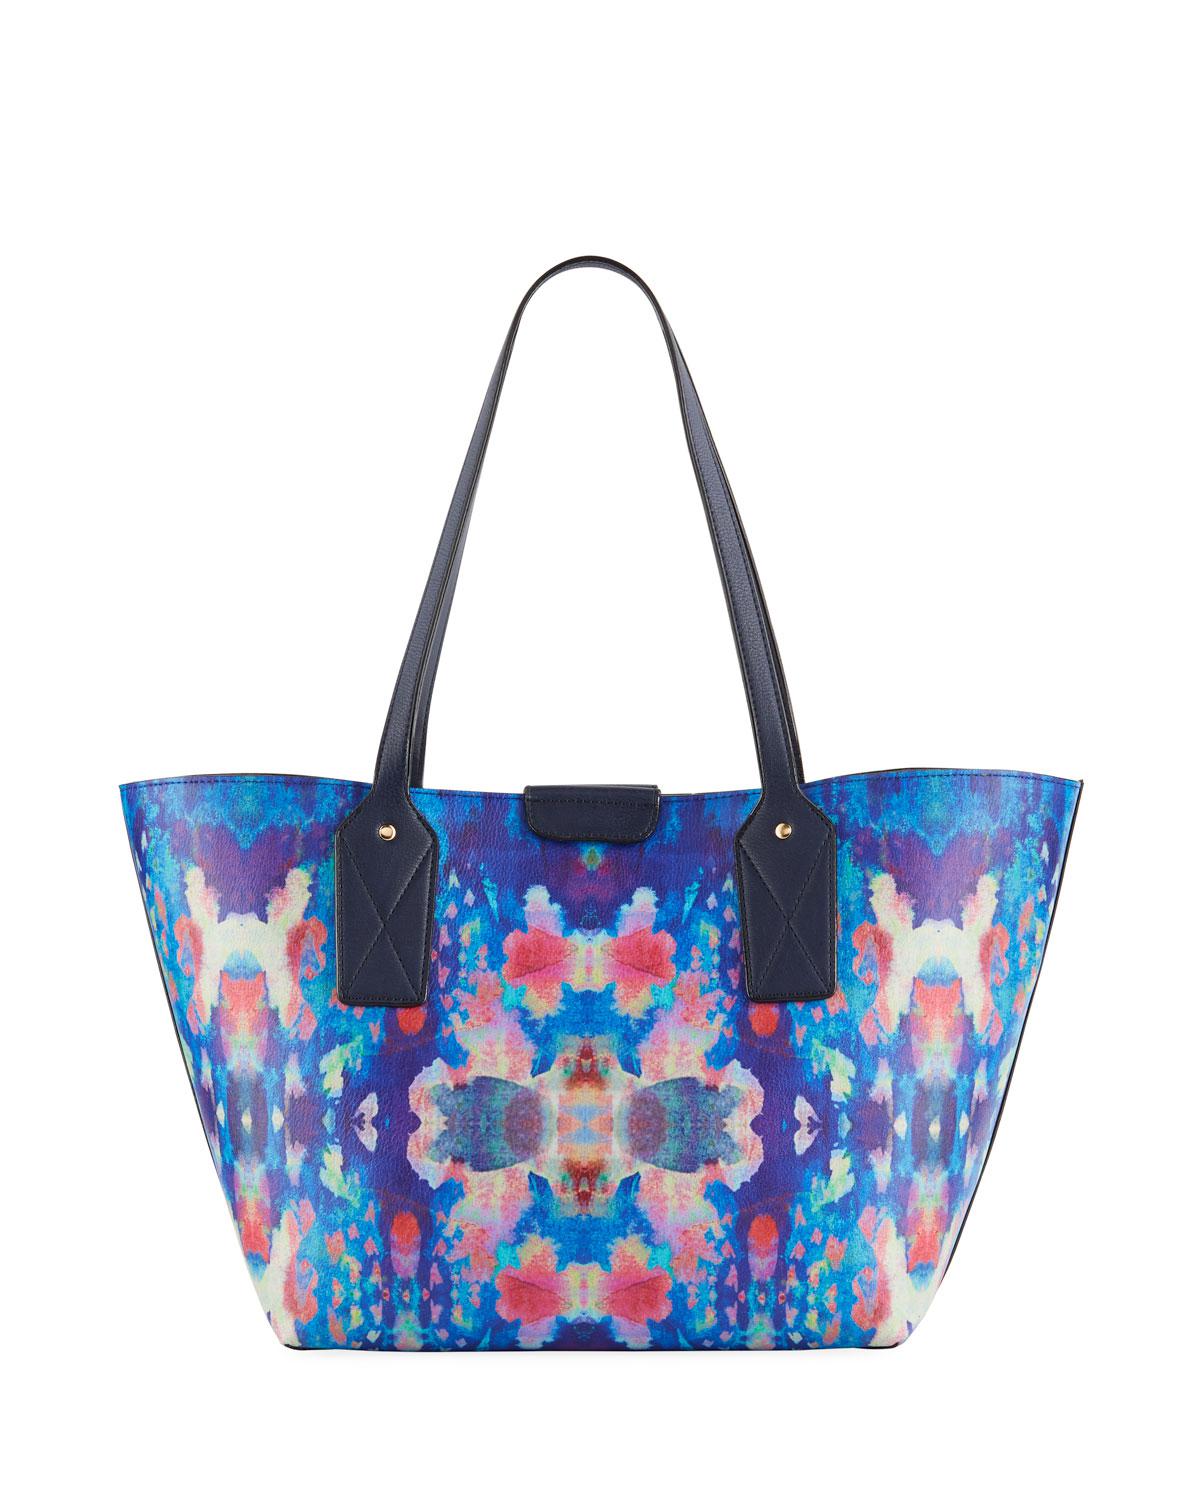 Neiman Marcus Boho Print Shoulder Tote Bag in Blue - Lyst